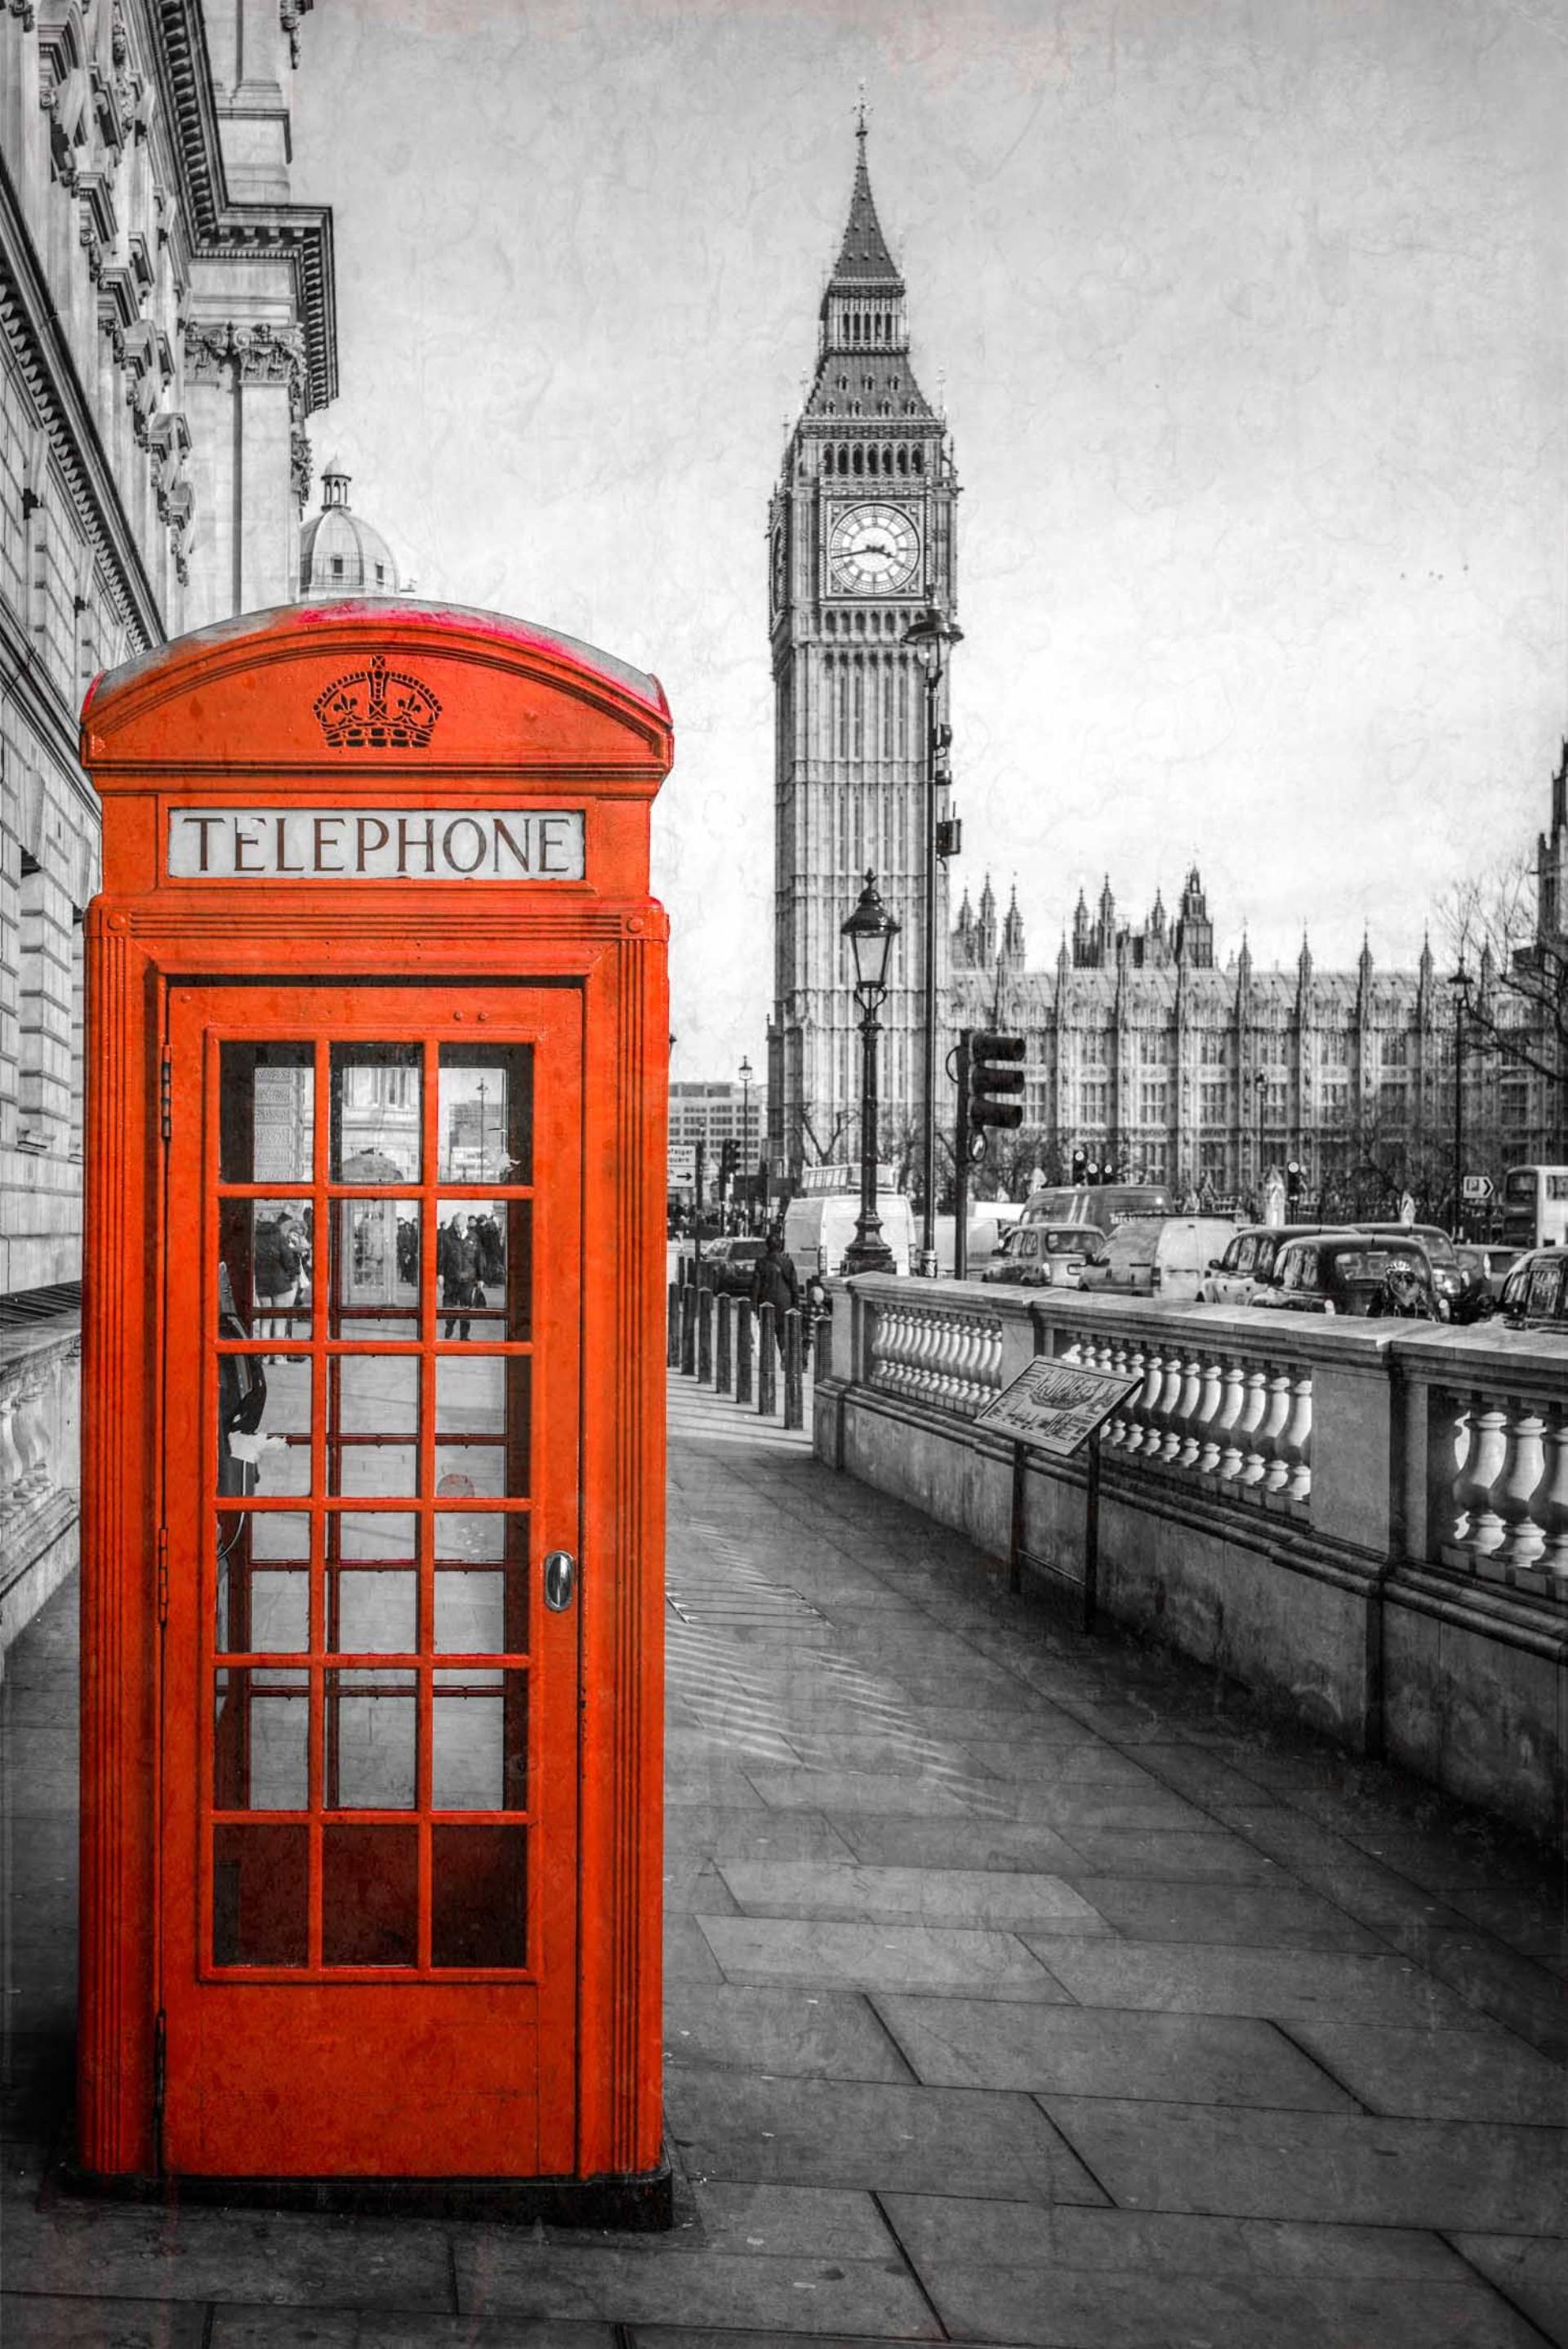 Saatchi Art: London Red Telephone Box - Limited Edition Print ...